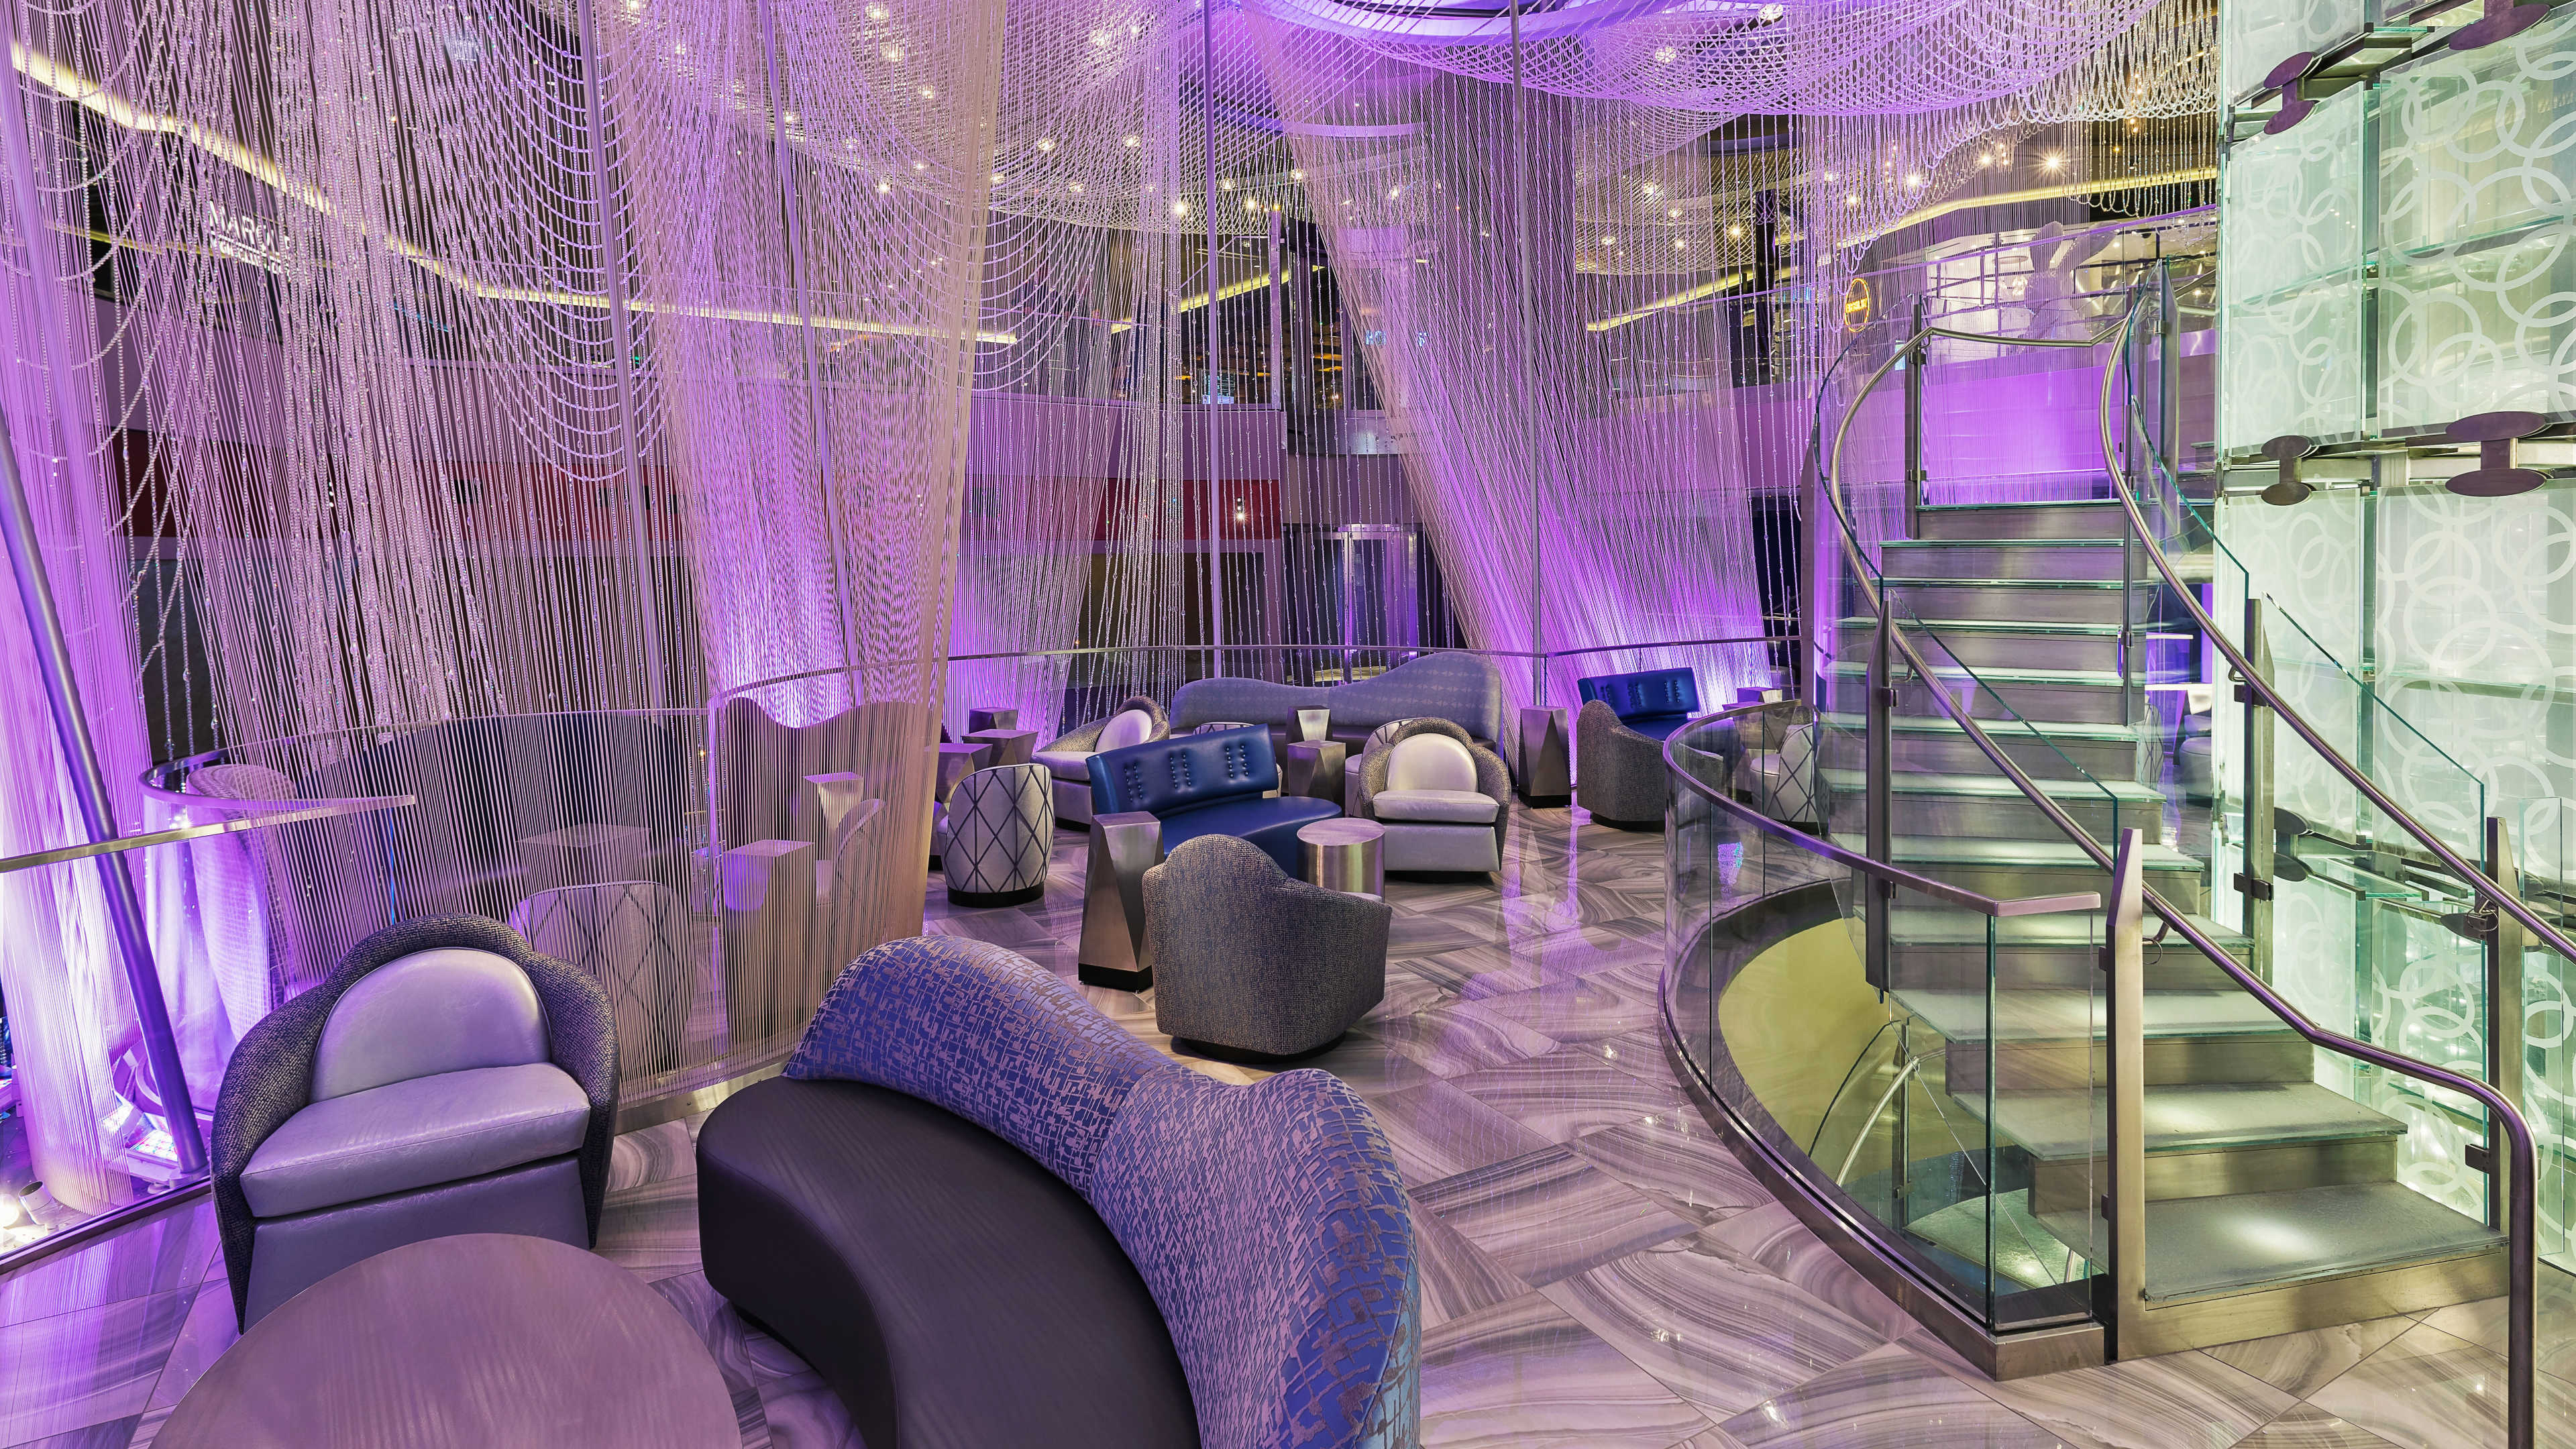 Las Vegas Luxury Hotel | The Chandelier | The Cosmopolitan